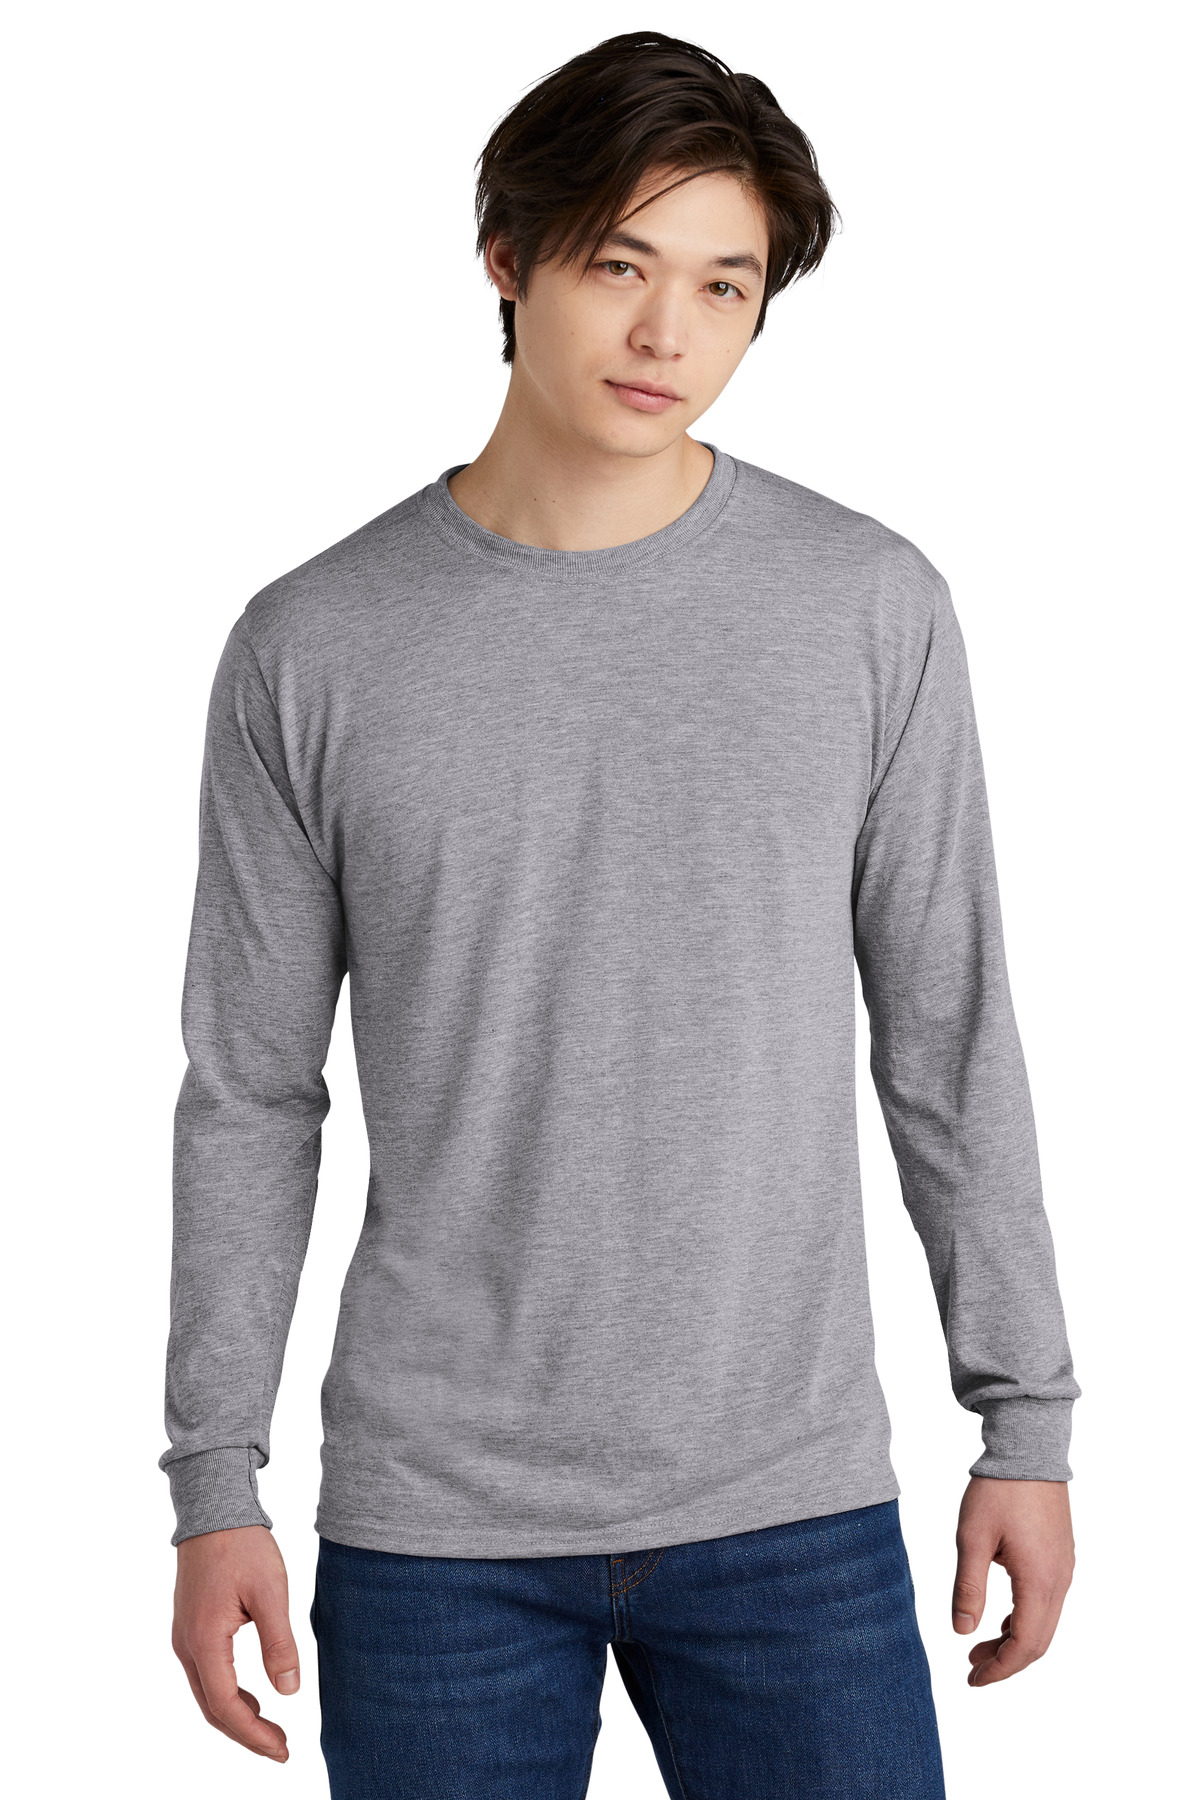 JERZEES Dri-Power 100% Polyester Long Sleeve T-Shirt...